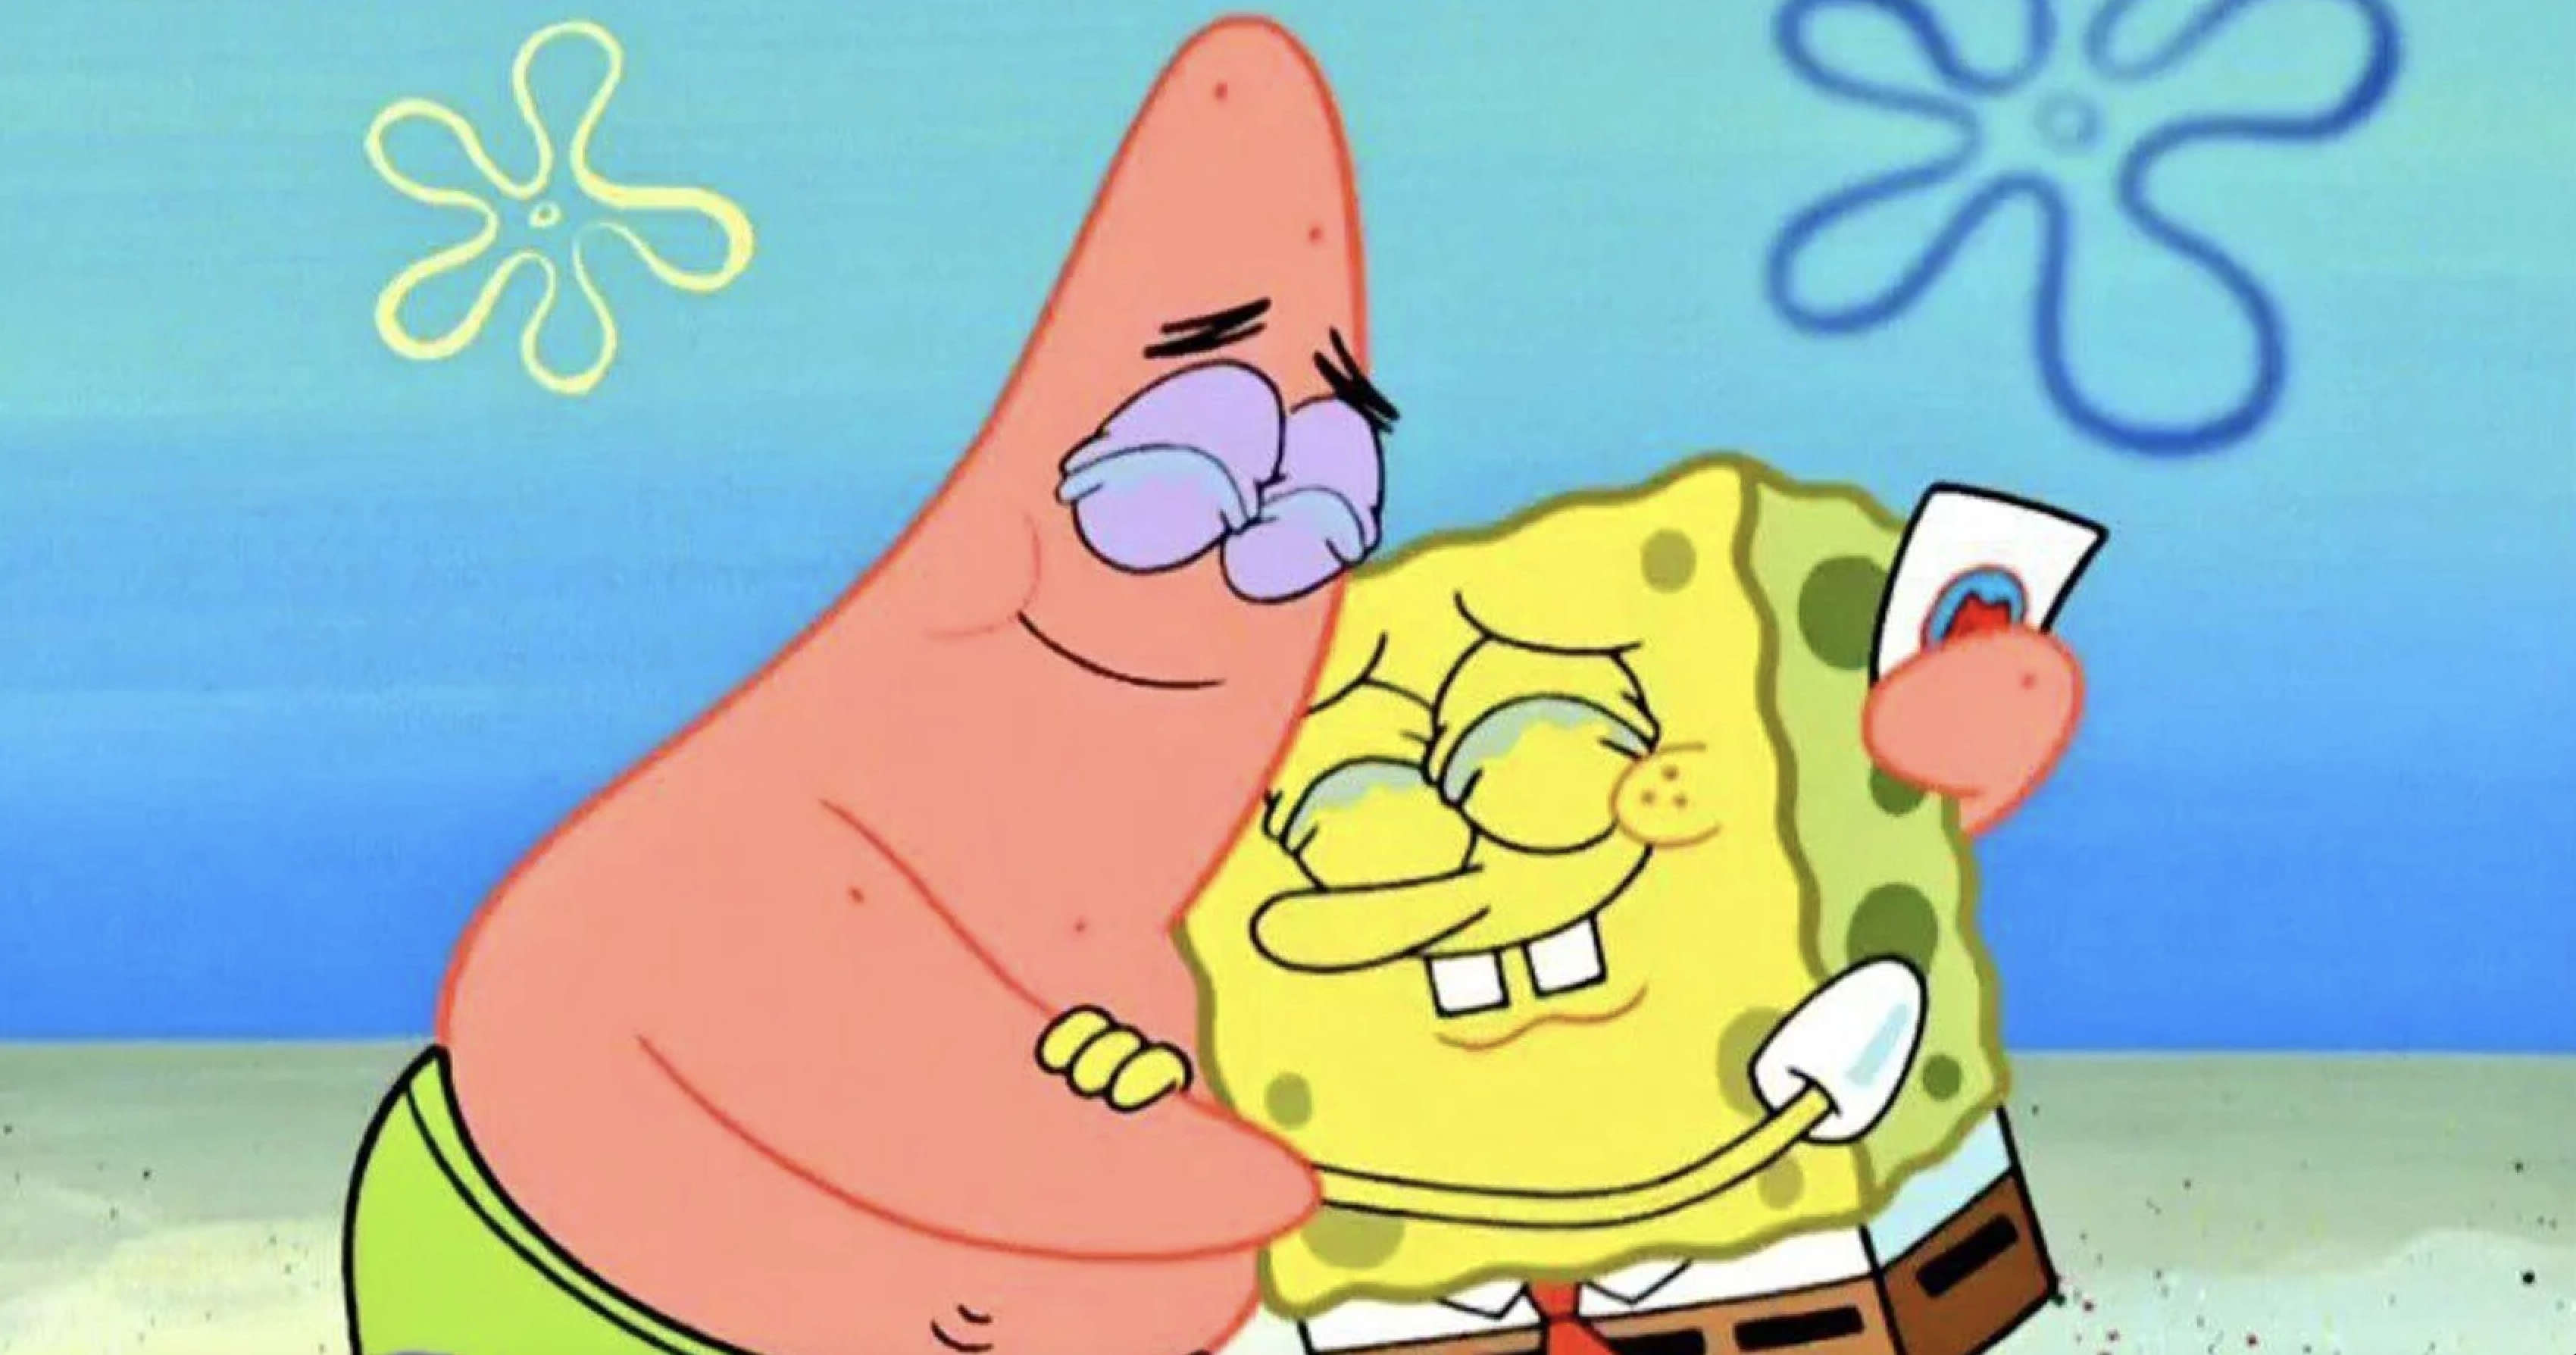 spongebob and patrick kissing